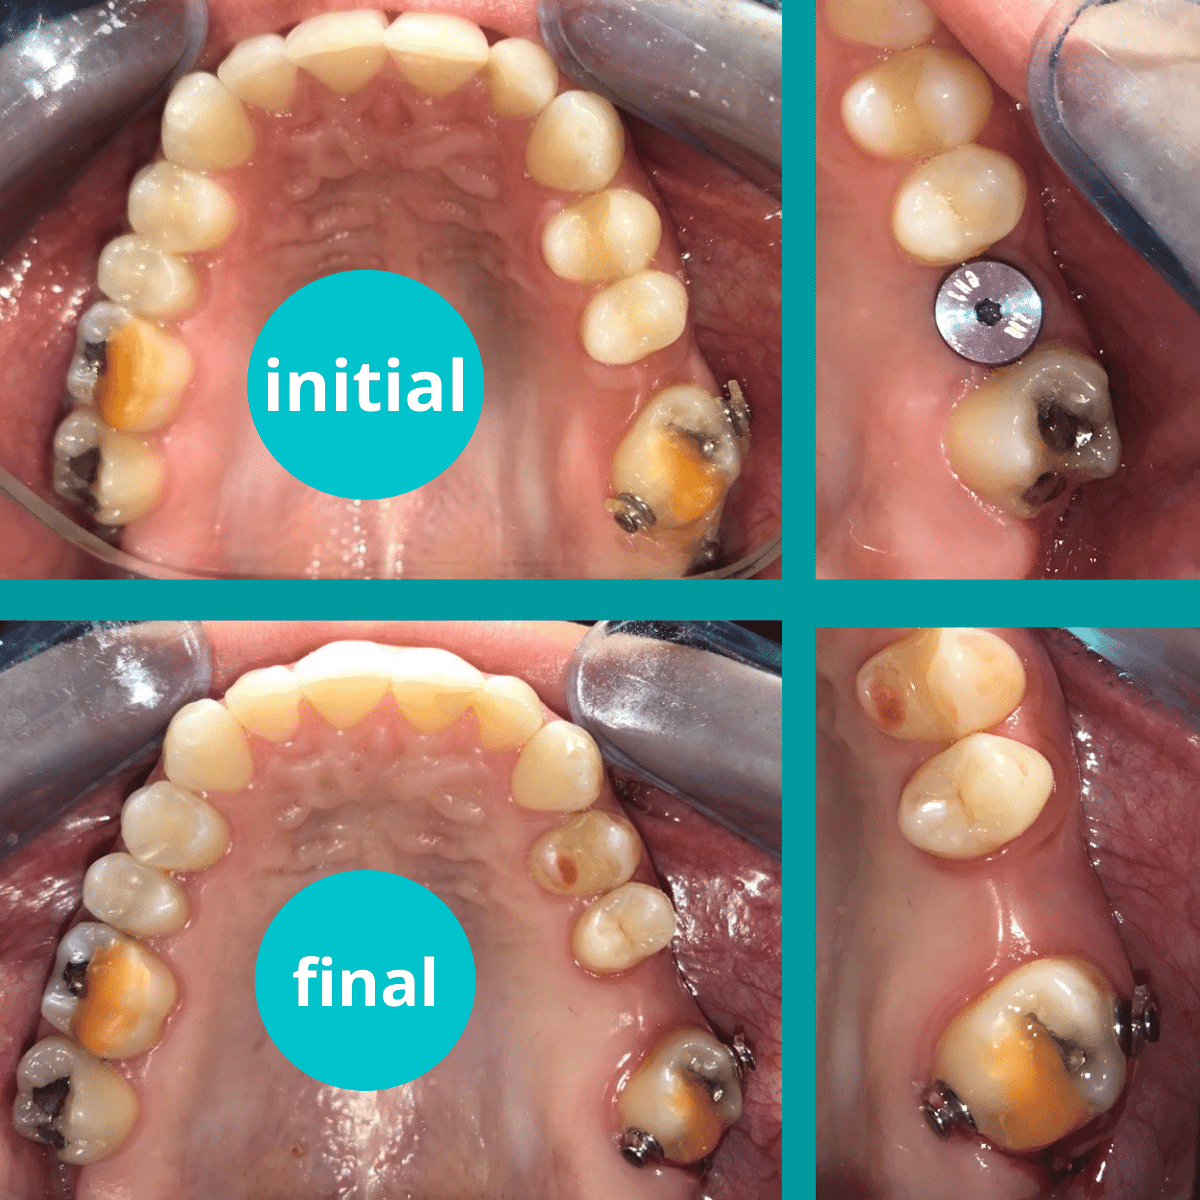 https://www.dentalcreation.ro/wp-content/uploads/2022/03/obtinerea-minim-invaziva-a-spatiului-ortodontie-dental-creation-timisoara.png